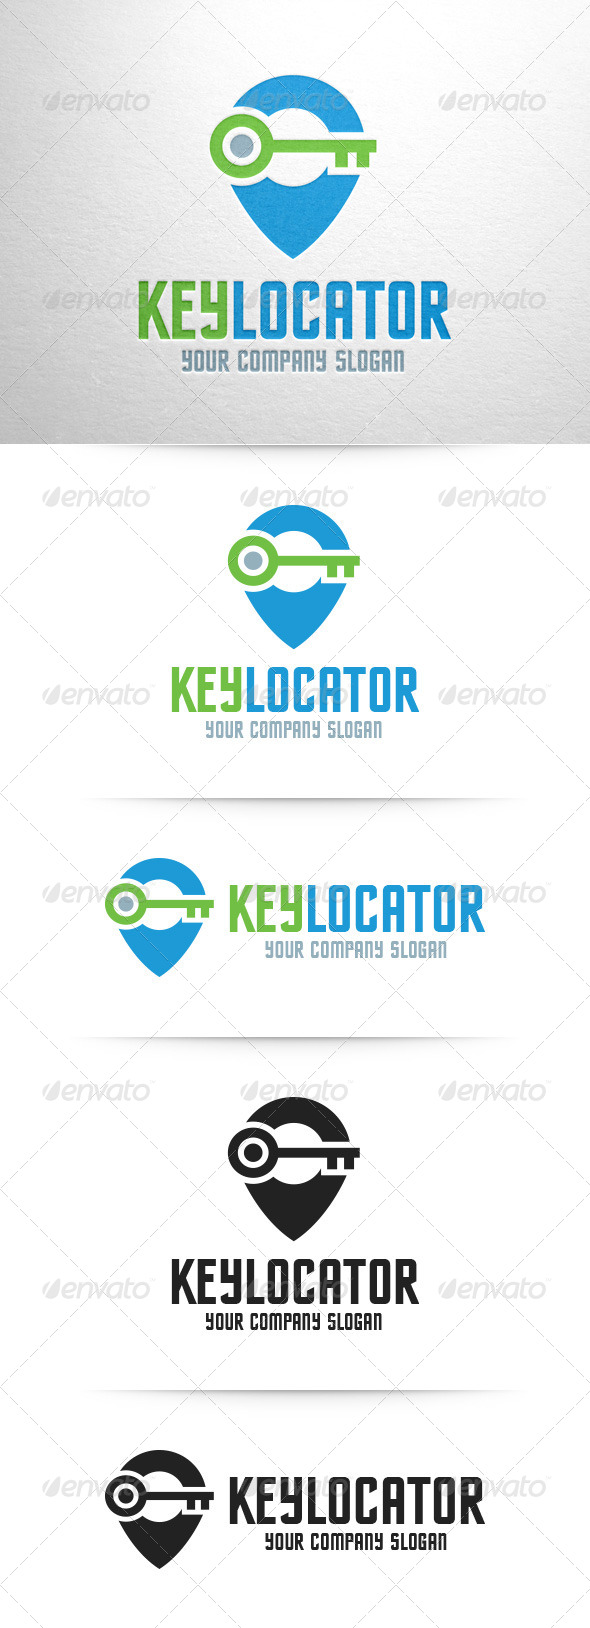 Key Locator Logo Template